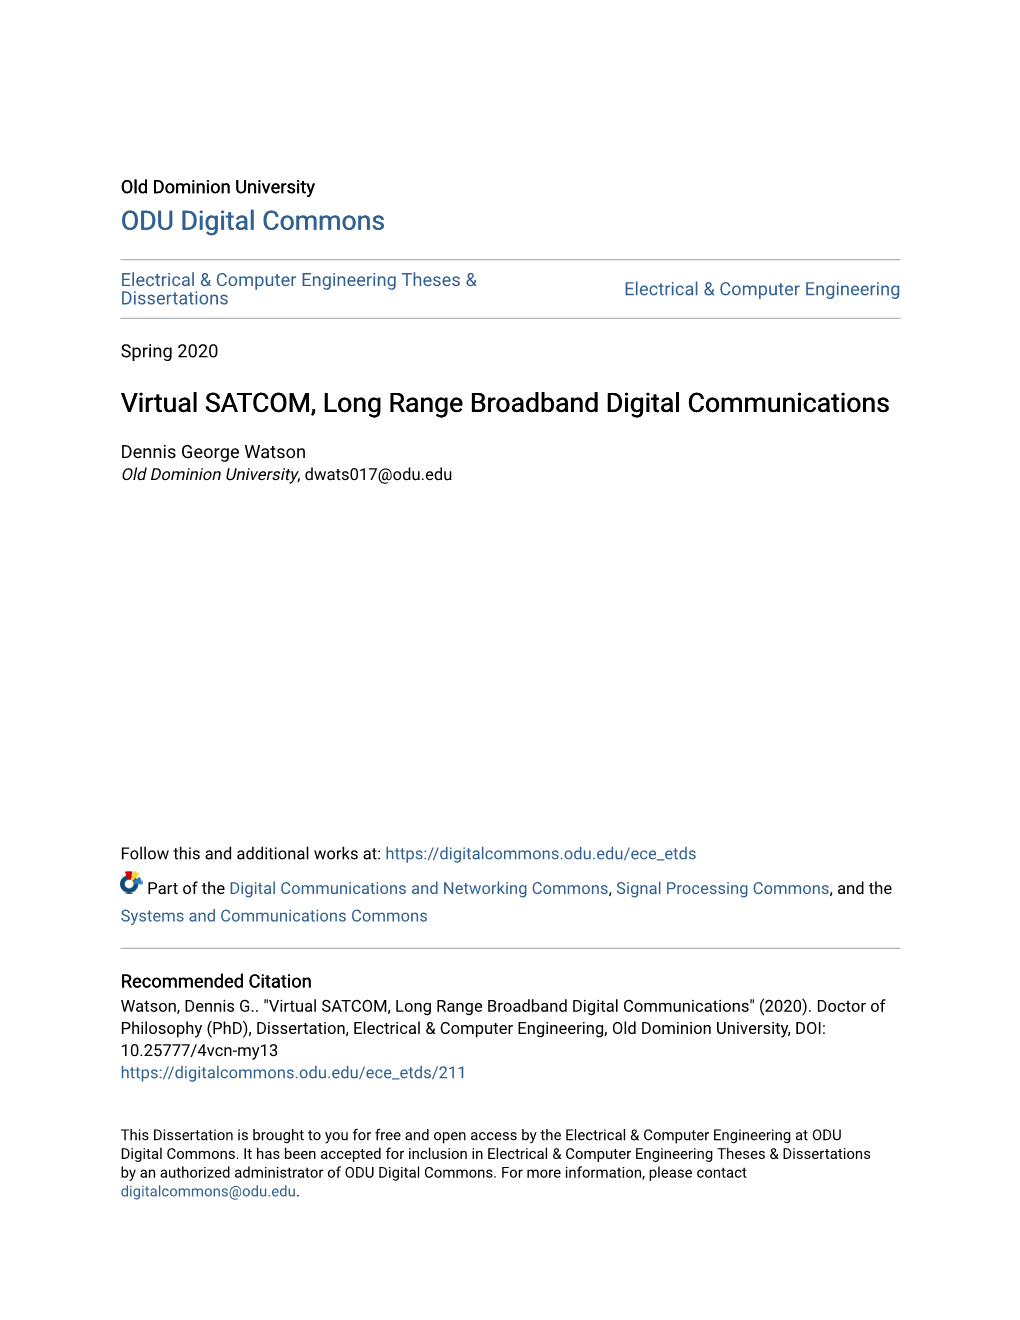 Virtual SATCOM, Long Range Broadband Digital Communications